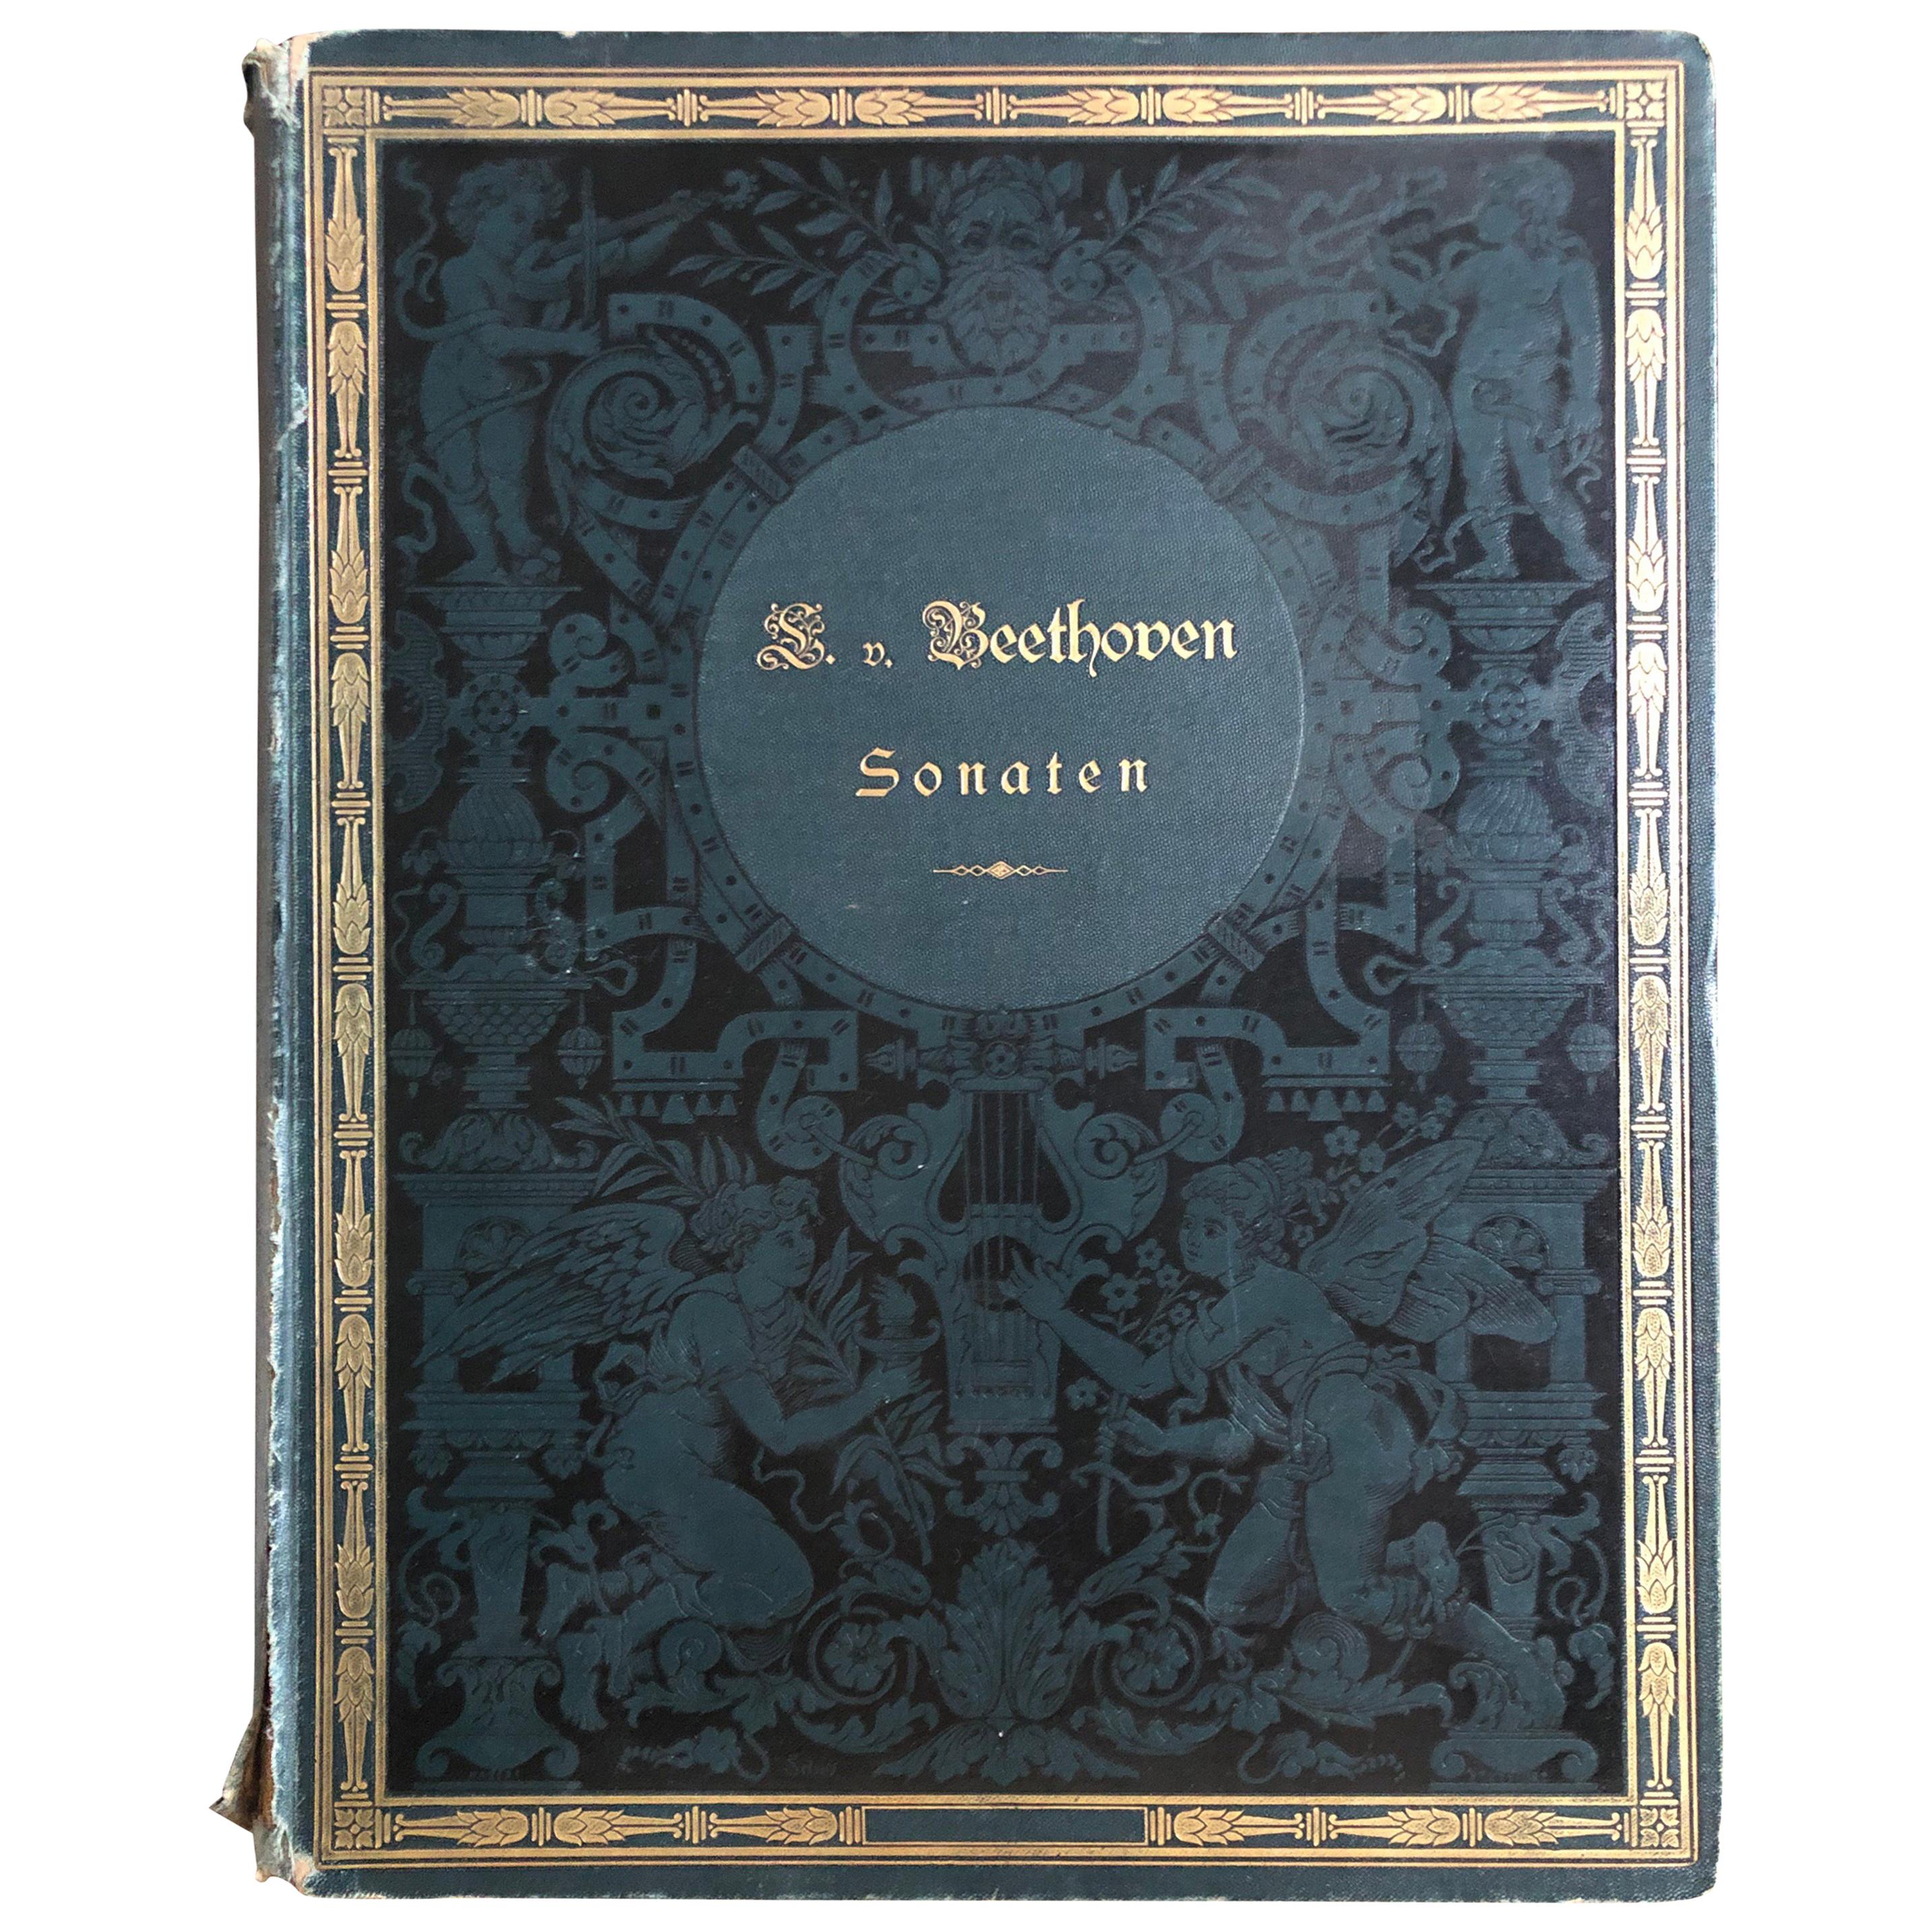 Ludwig van Beethoven Sonaten Sheet Music Book, C. F. Peters, Leipzig, circa 1820